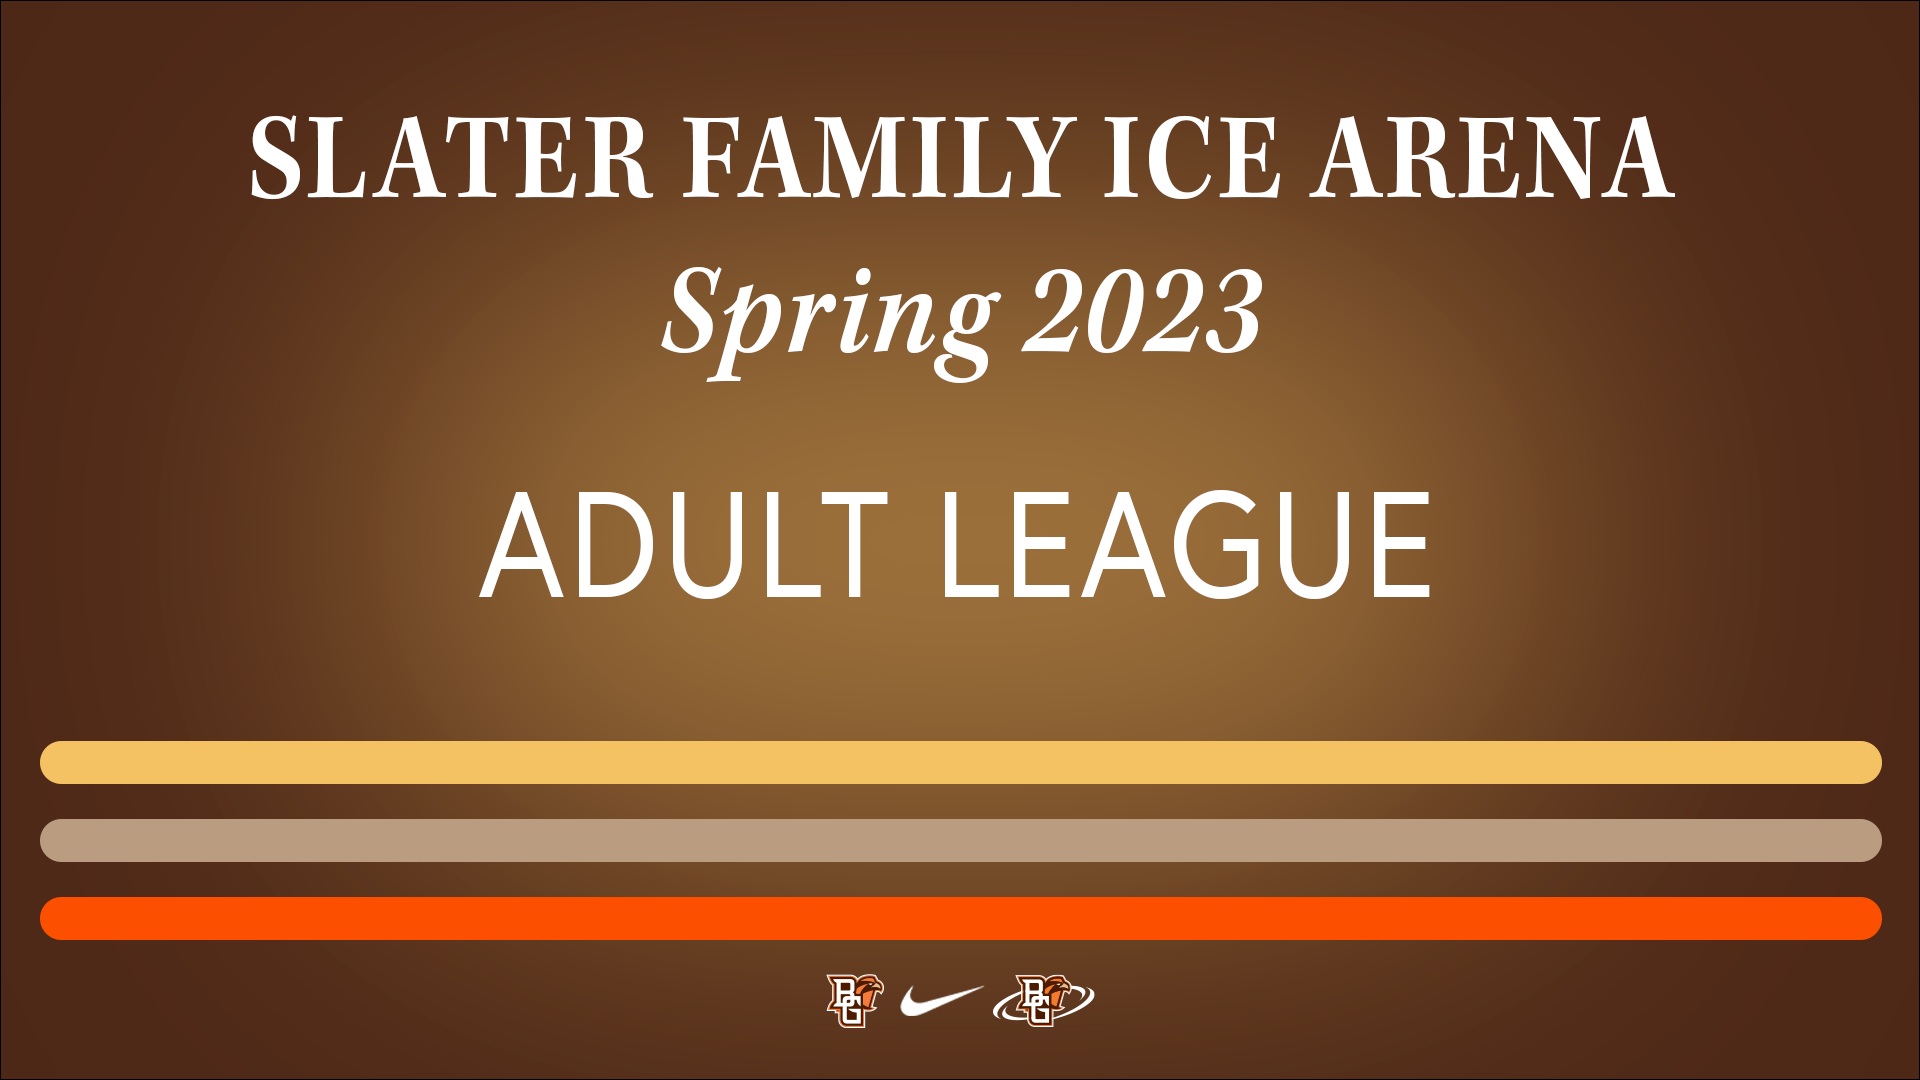 Spring Adult League Registration